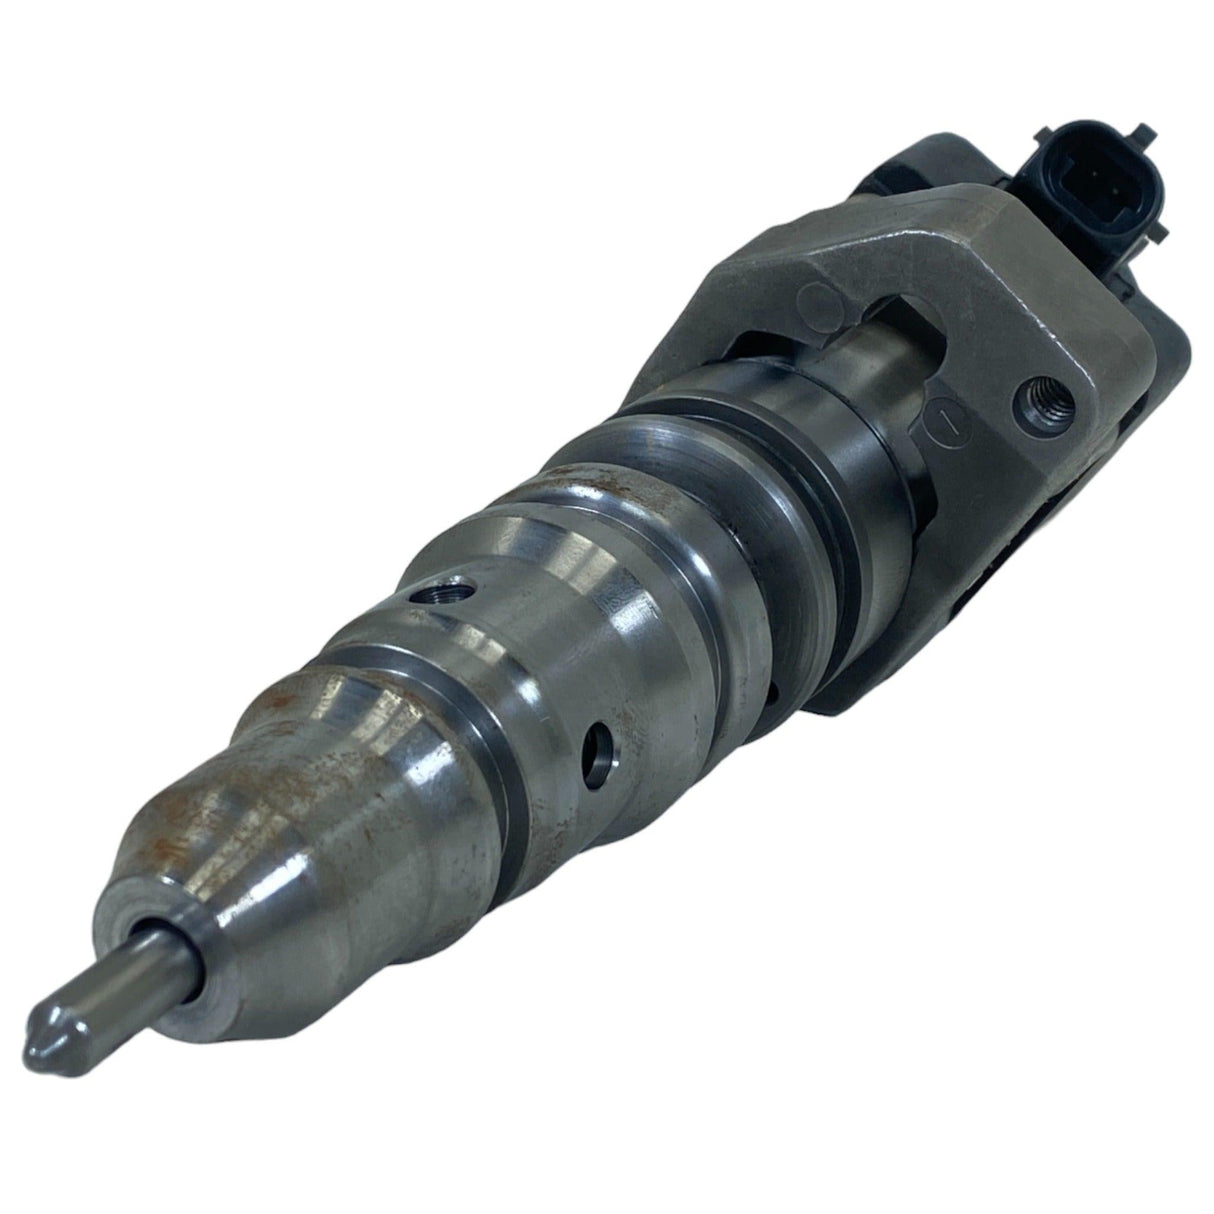 1830561c92 Genuine International Injector For Navistar